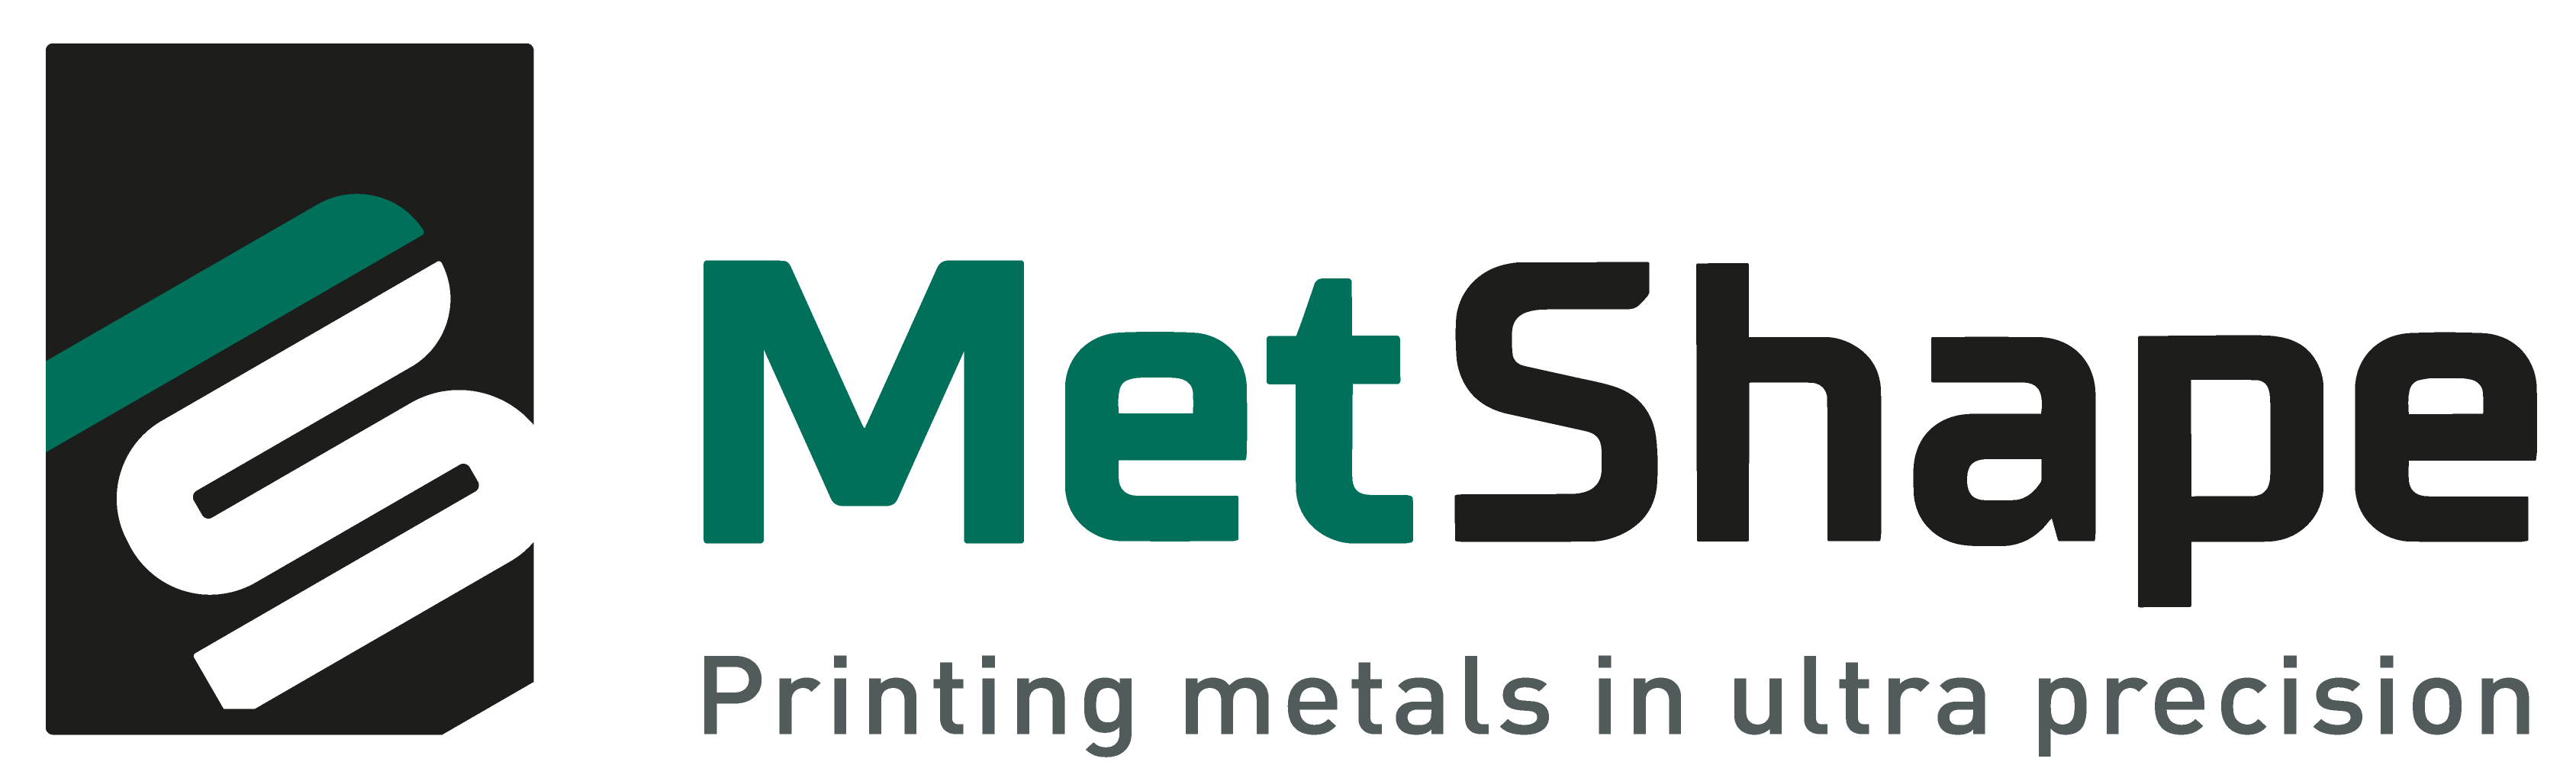 MetShape GmbH